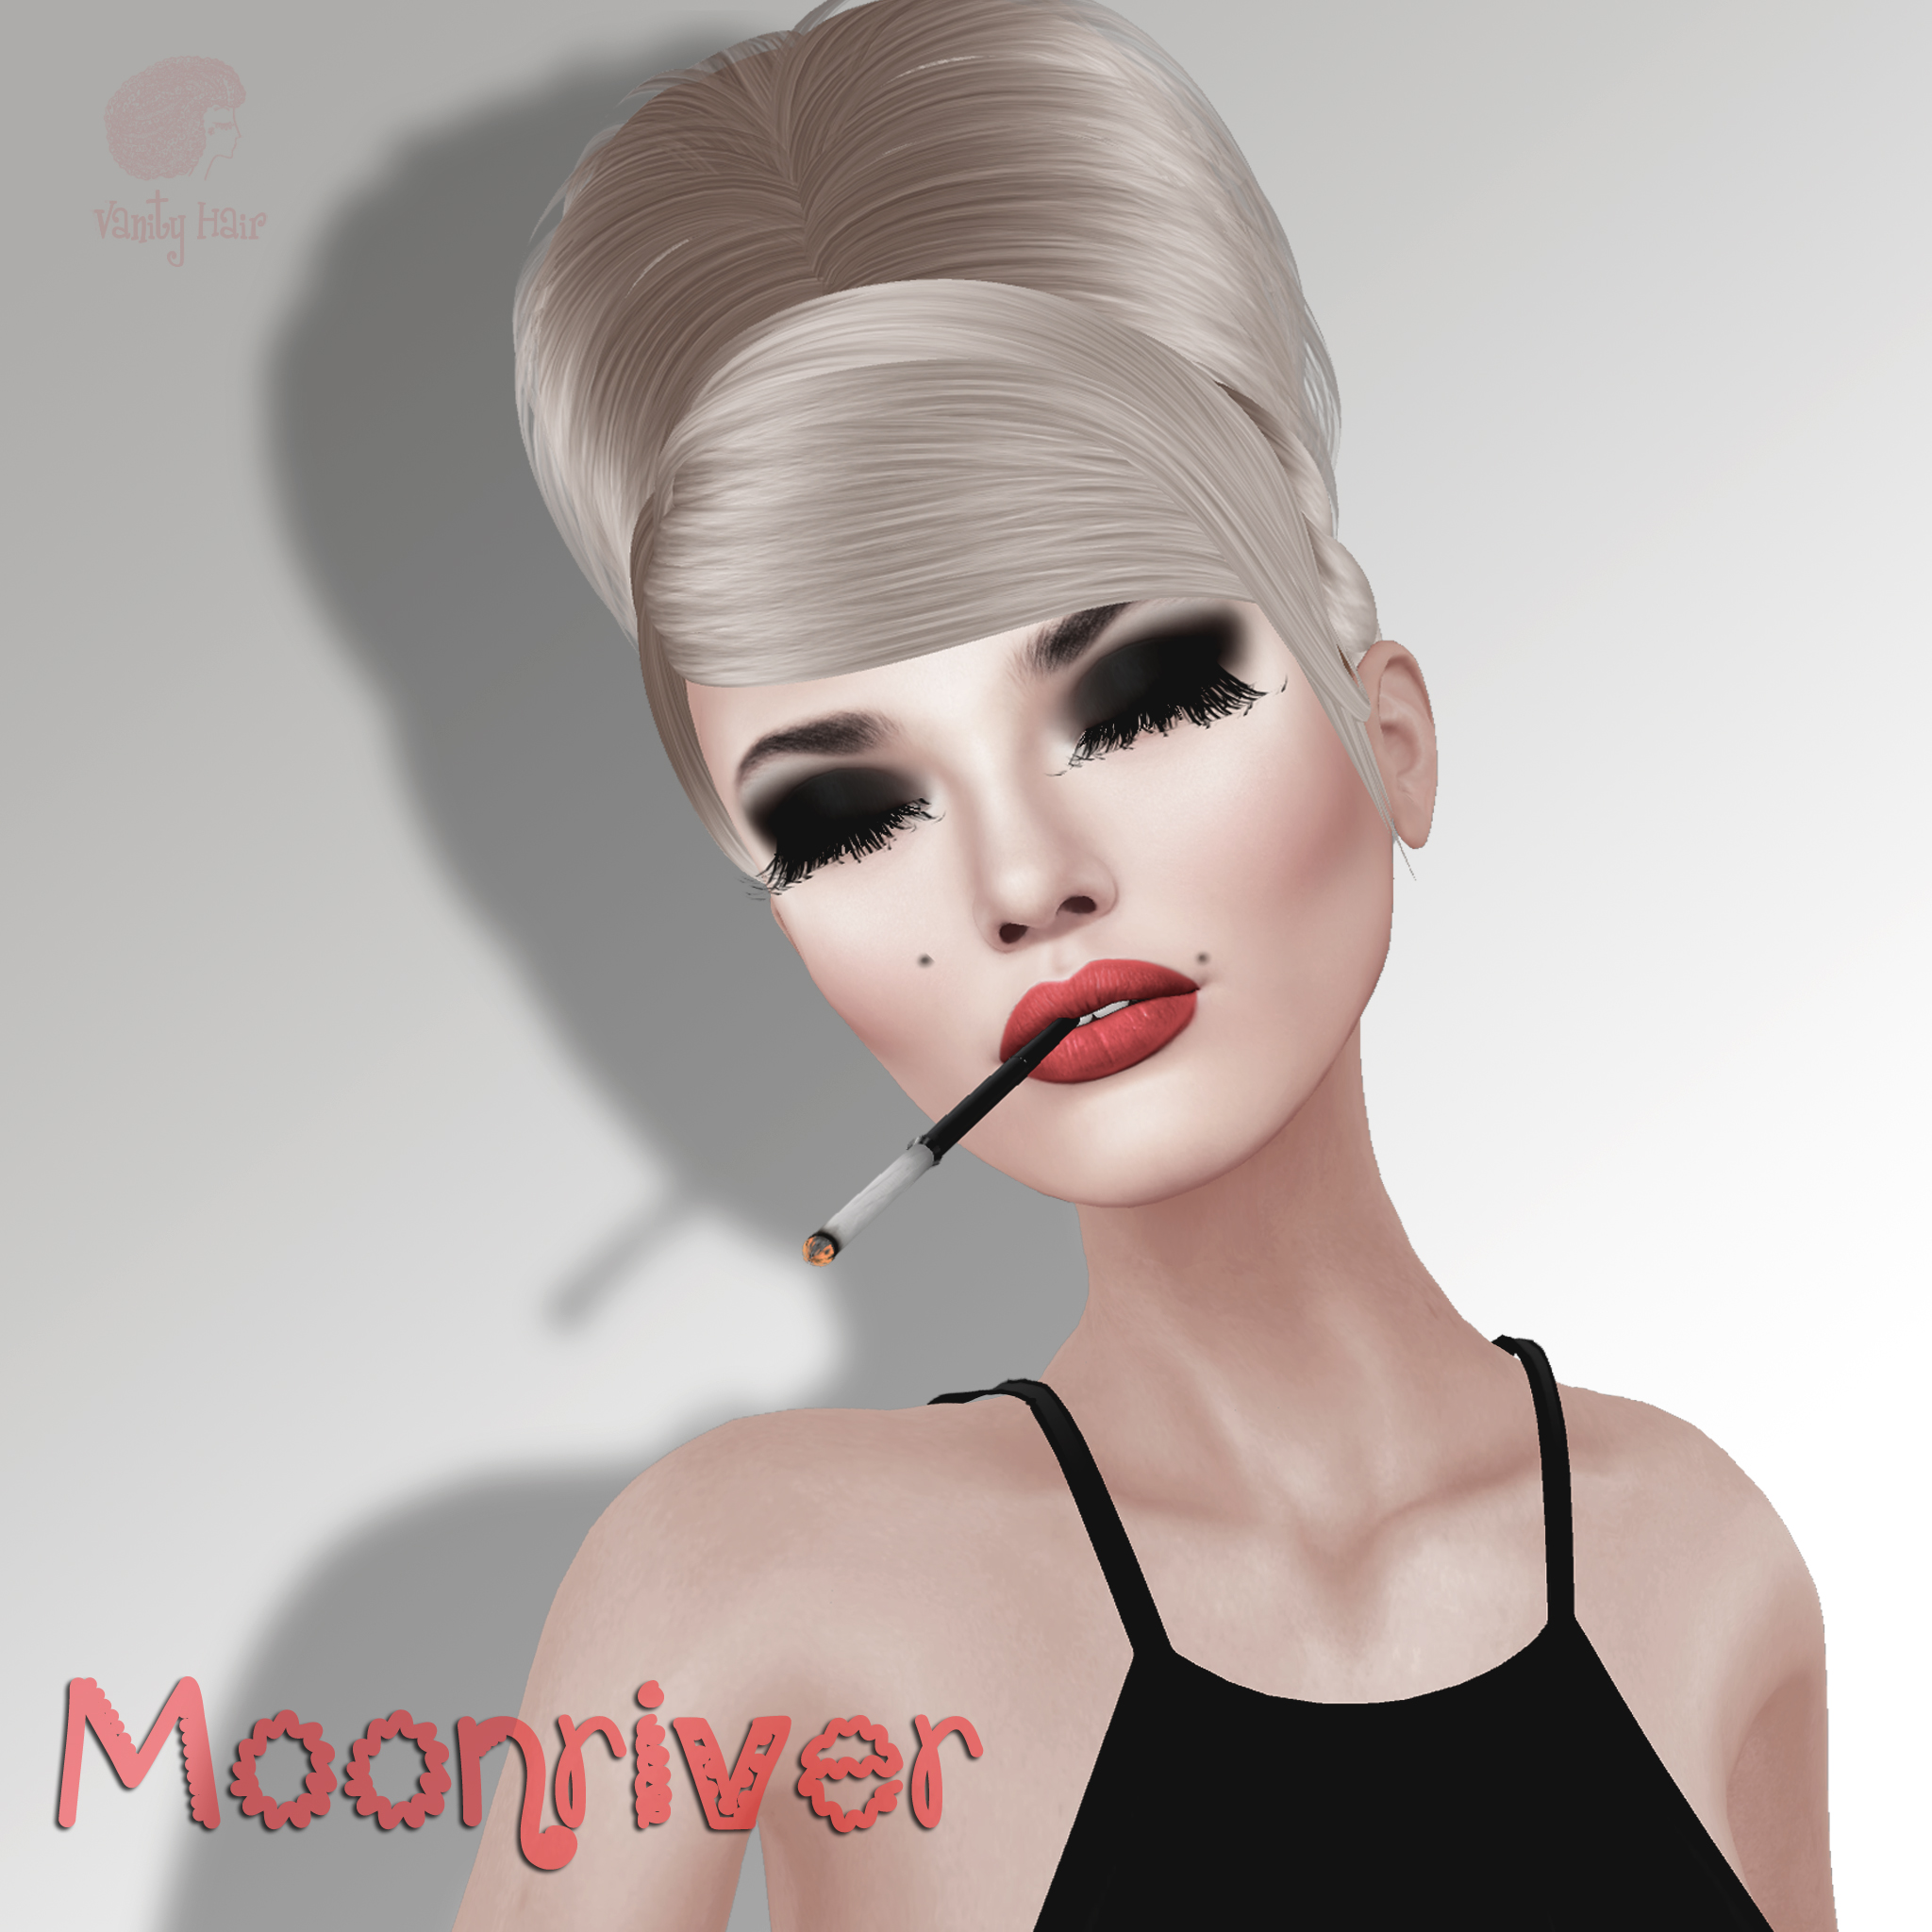 VanityHair@Moonriver